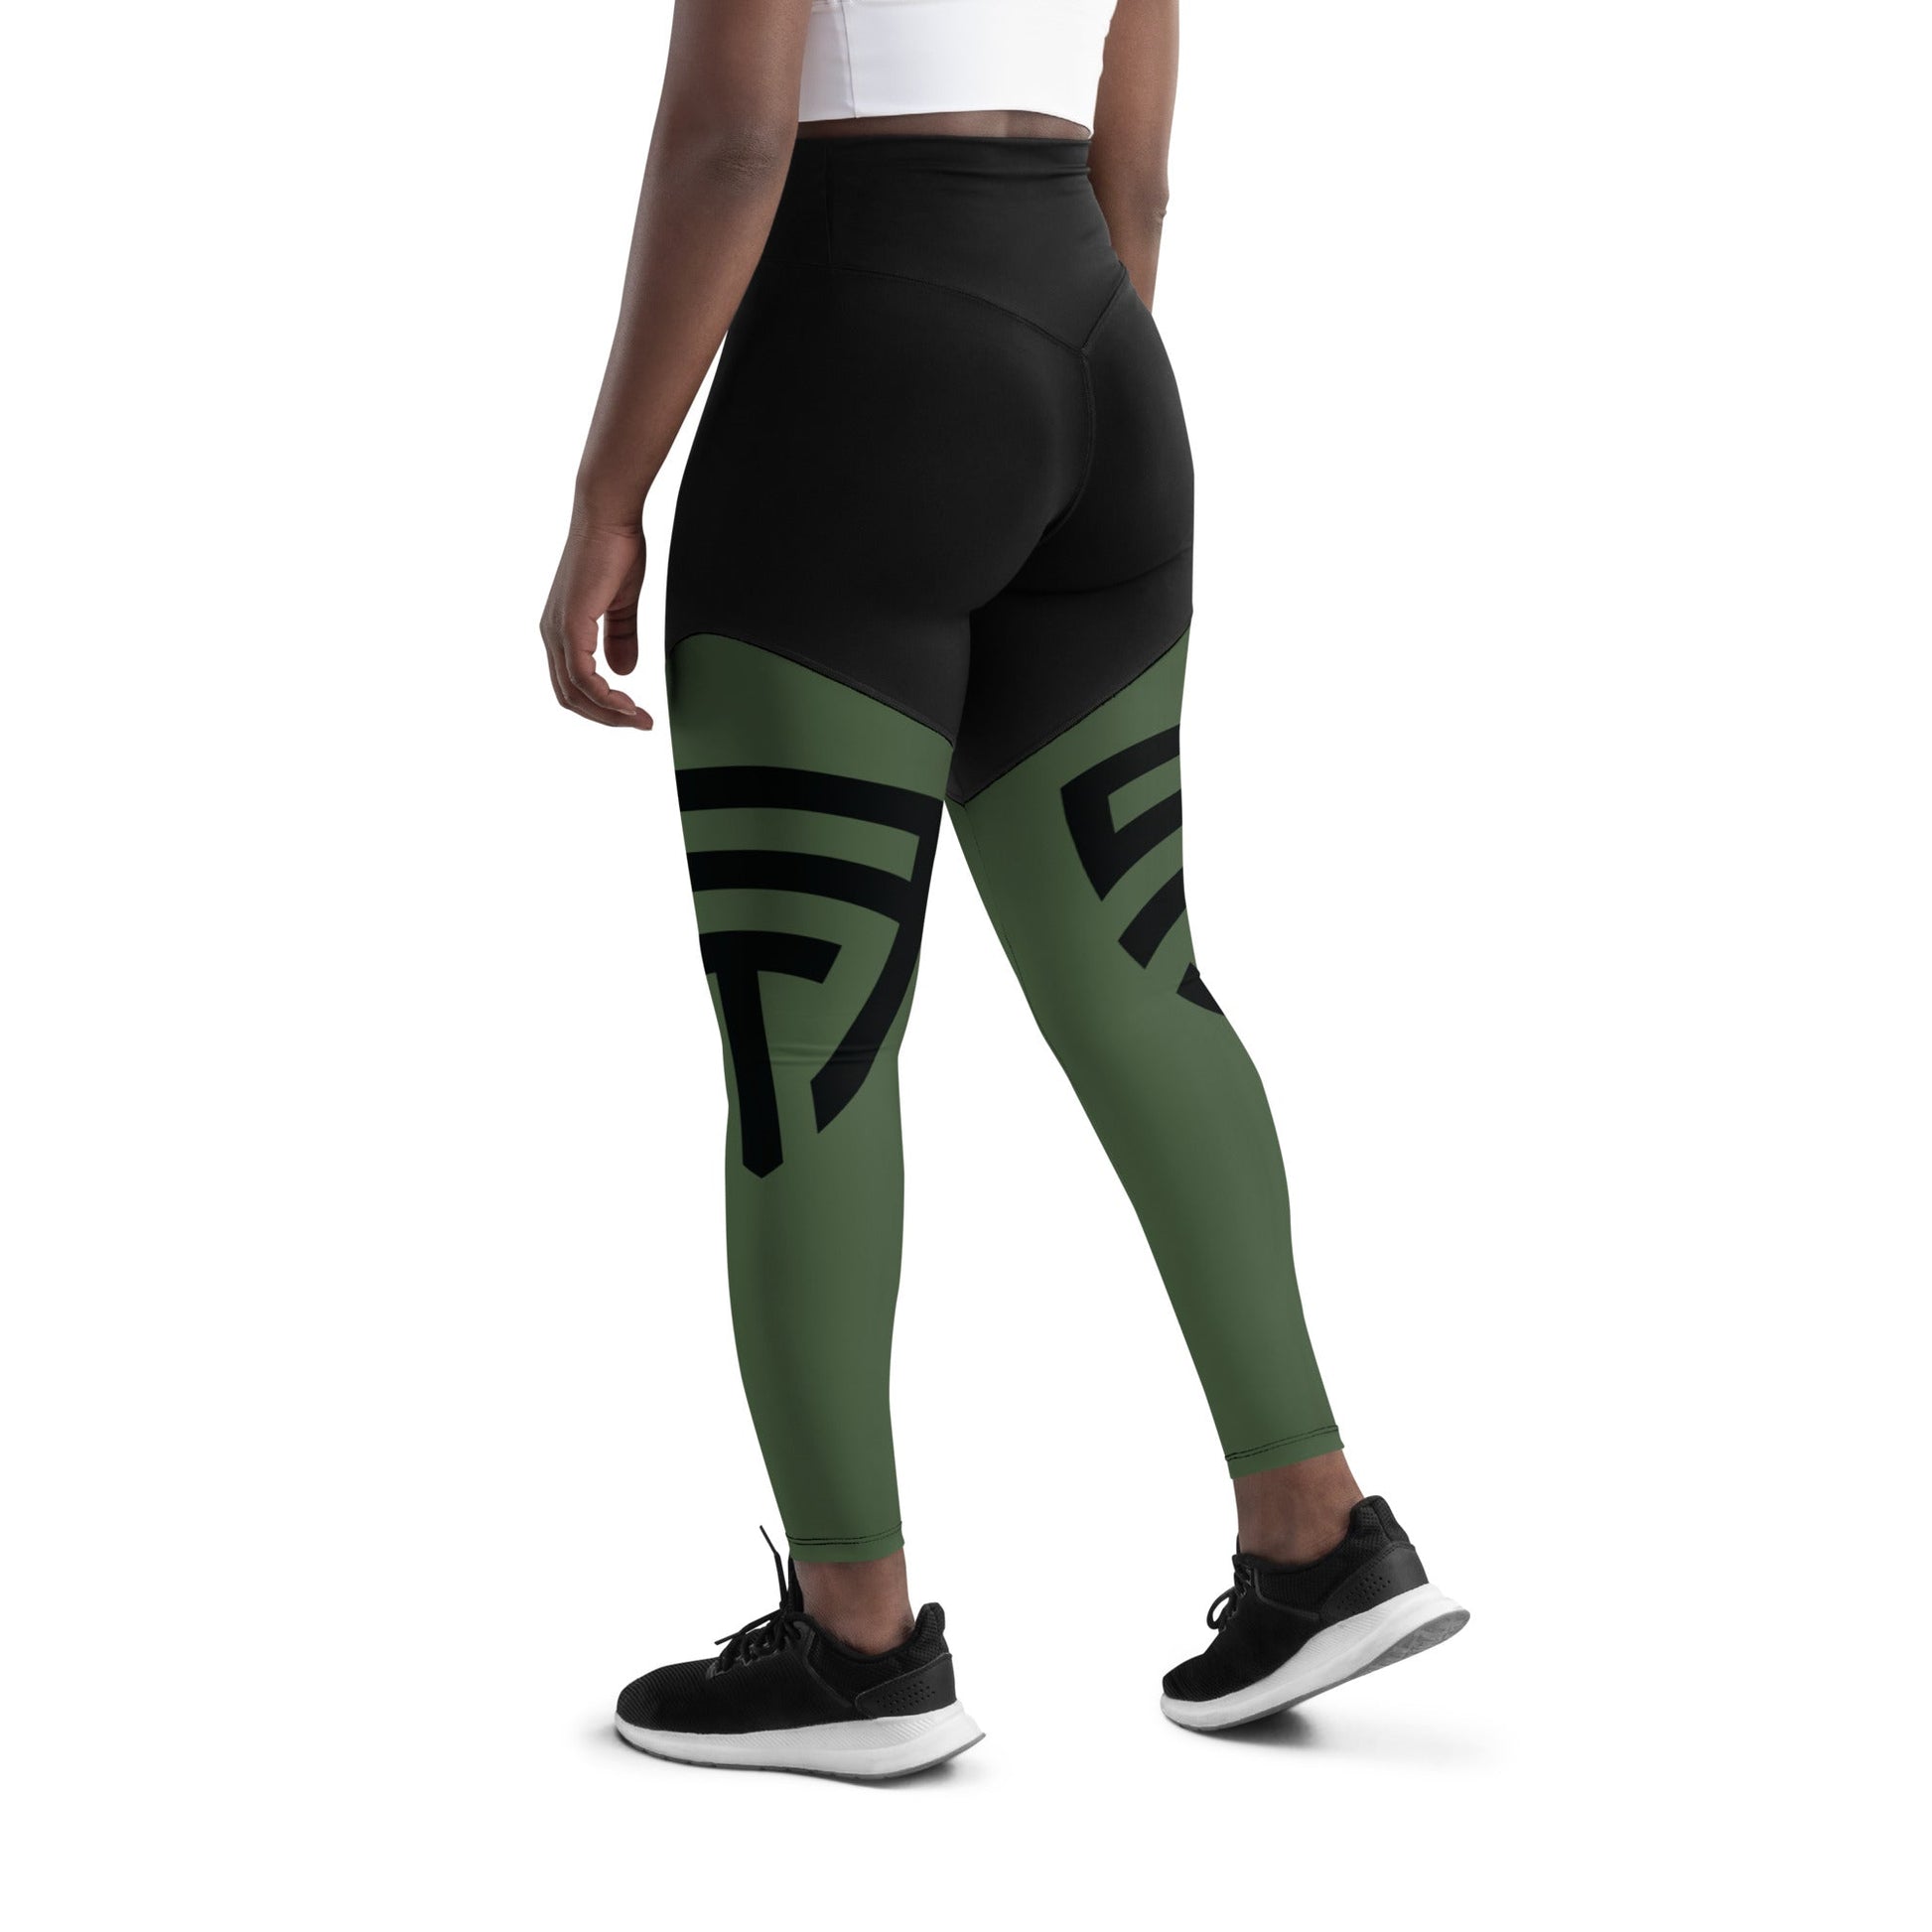 The Prototype Sports Leggings Army Green/Black